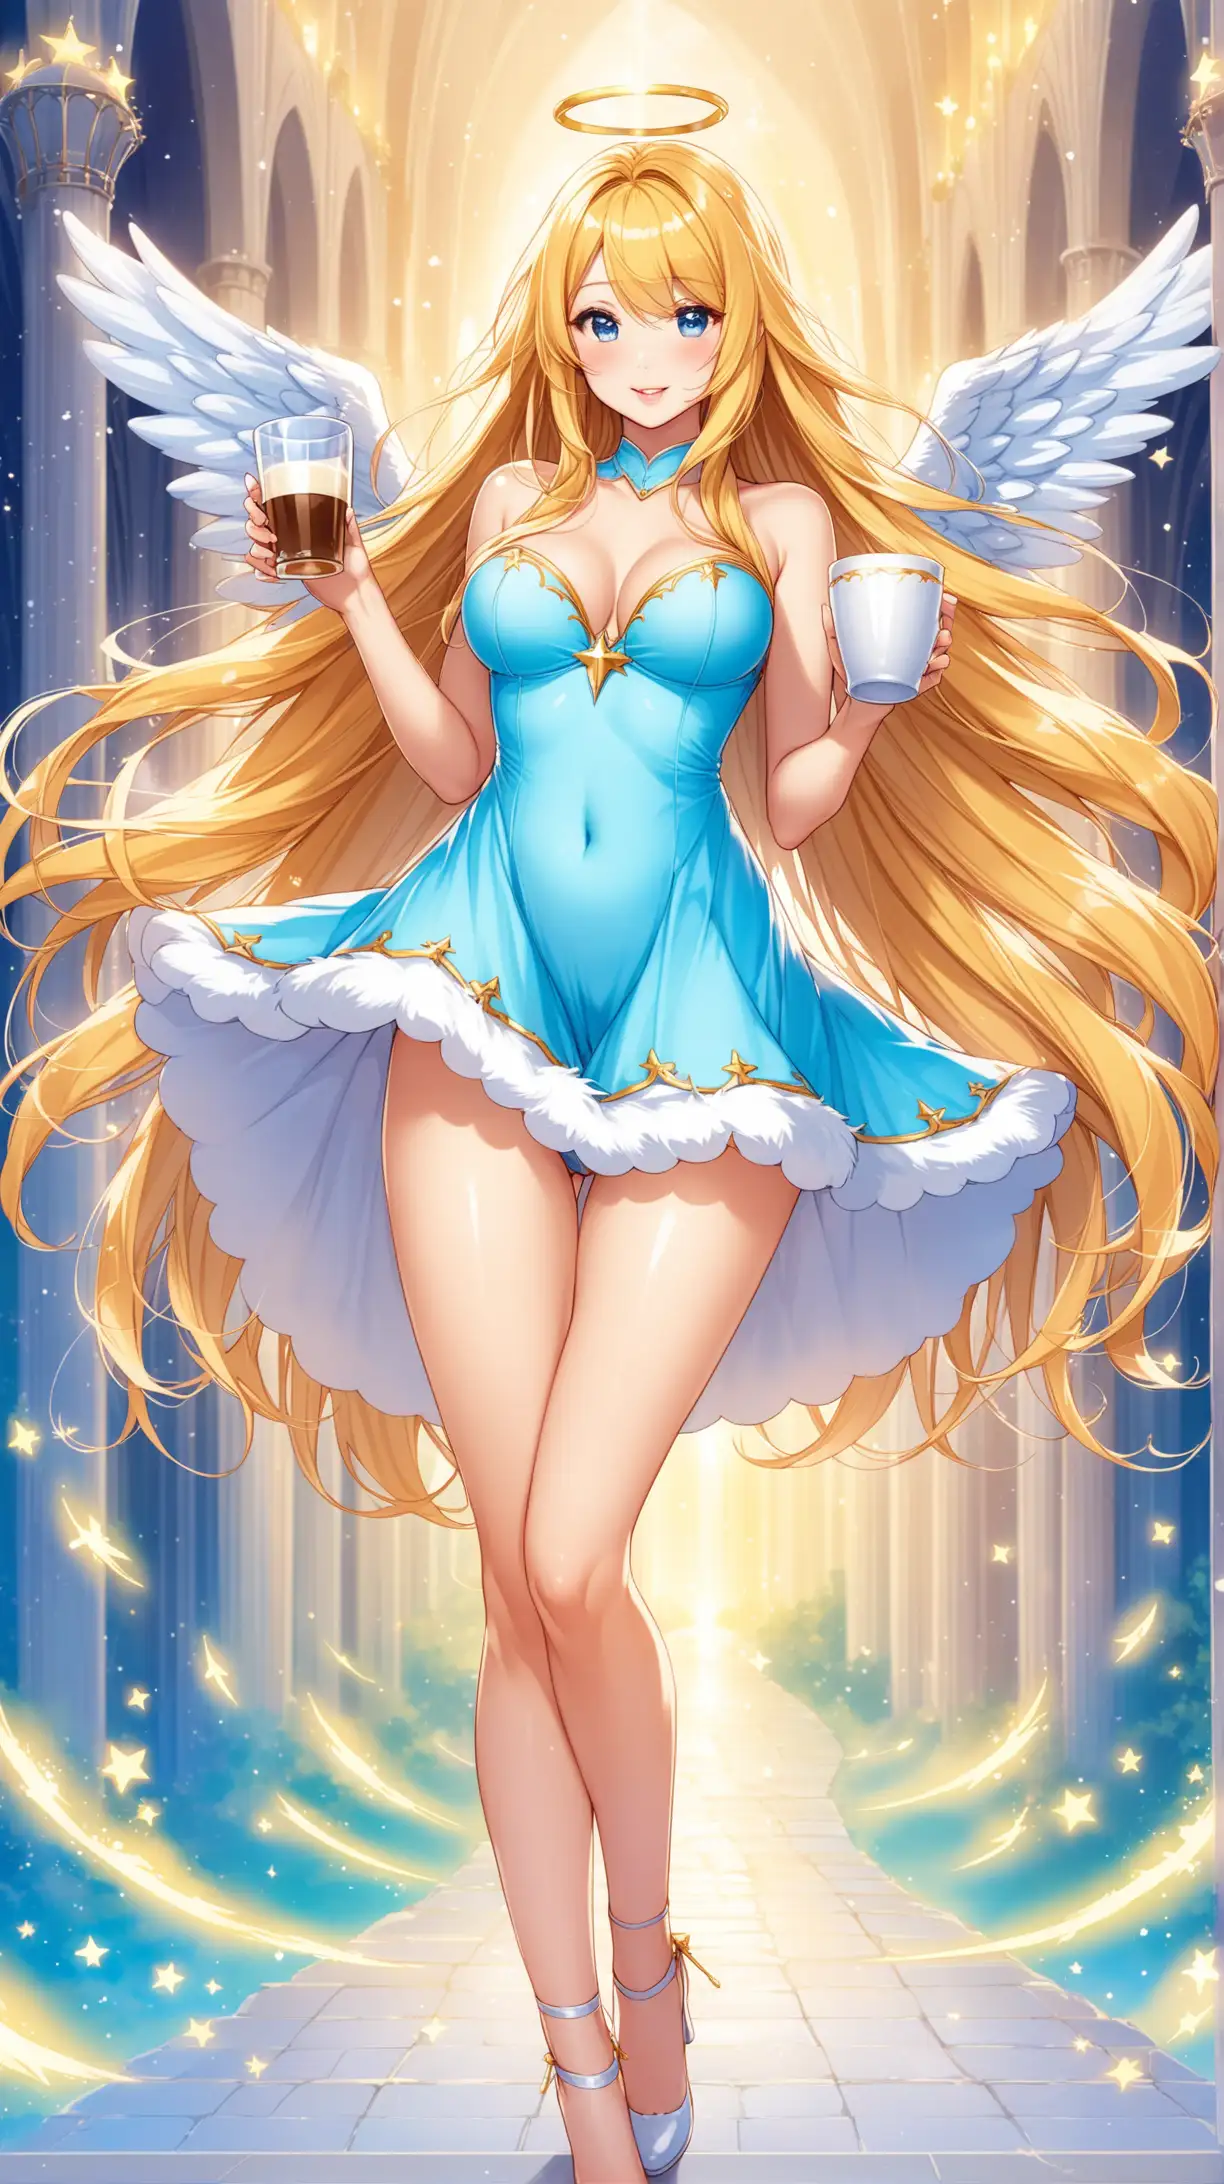 Sexy women carry cup , angel costume, playful, blond long hair, light blue short sexy dress, fantastic background .